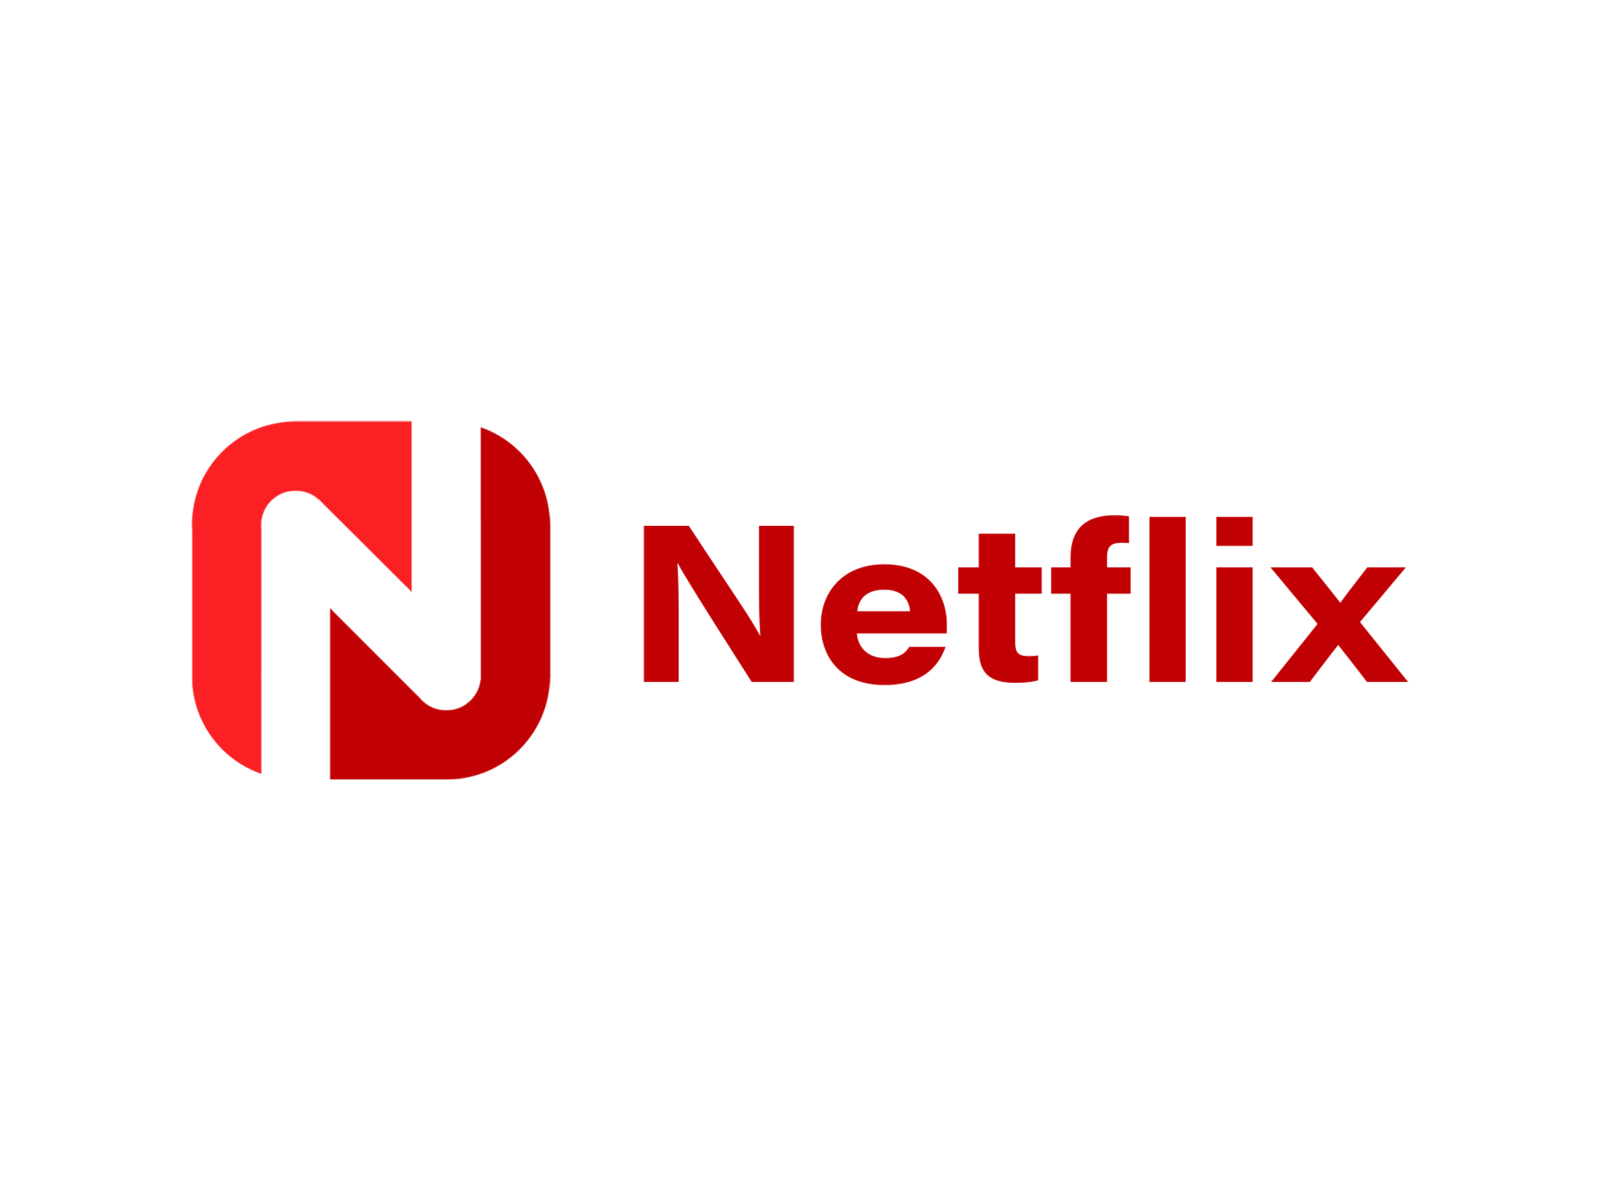 Netflix logo redesign by Mansu on Dribbble